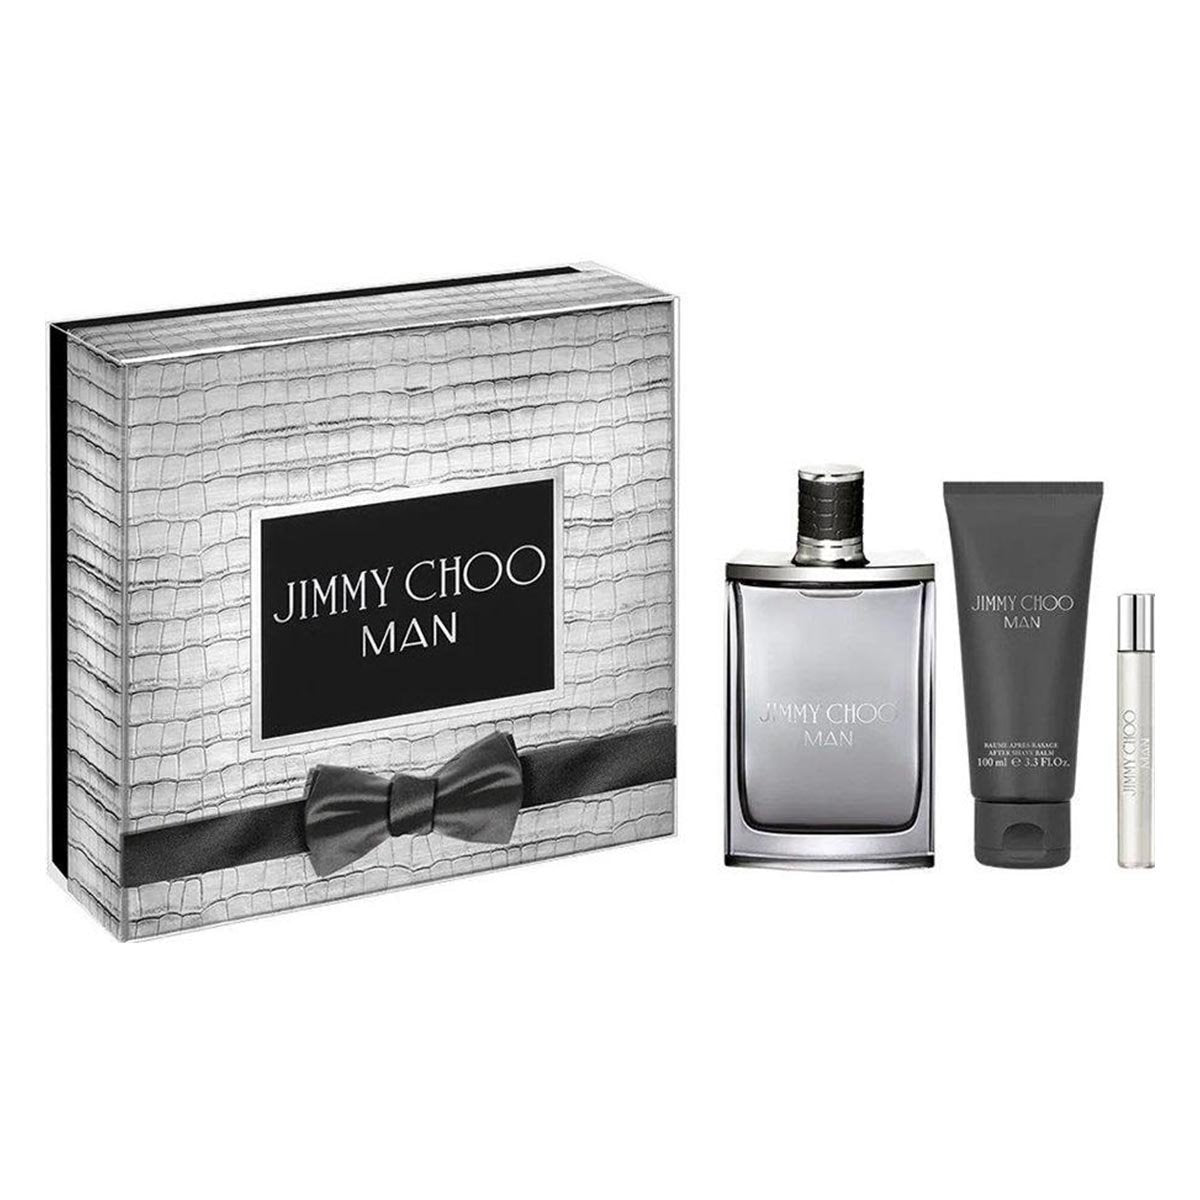 Jimmy Choo Man EDT Deluxe Gift Set - My Perfume Shop Australia